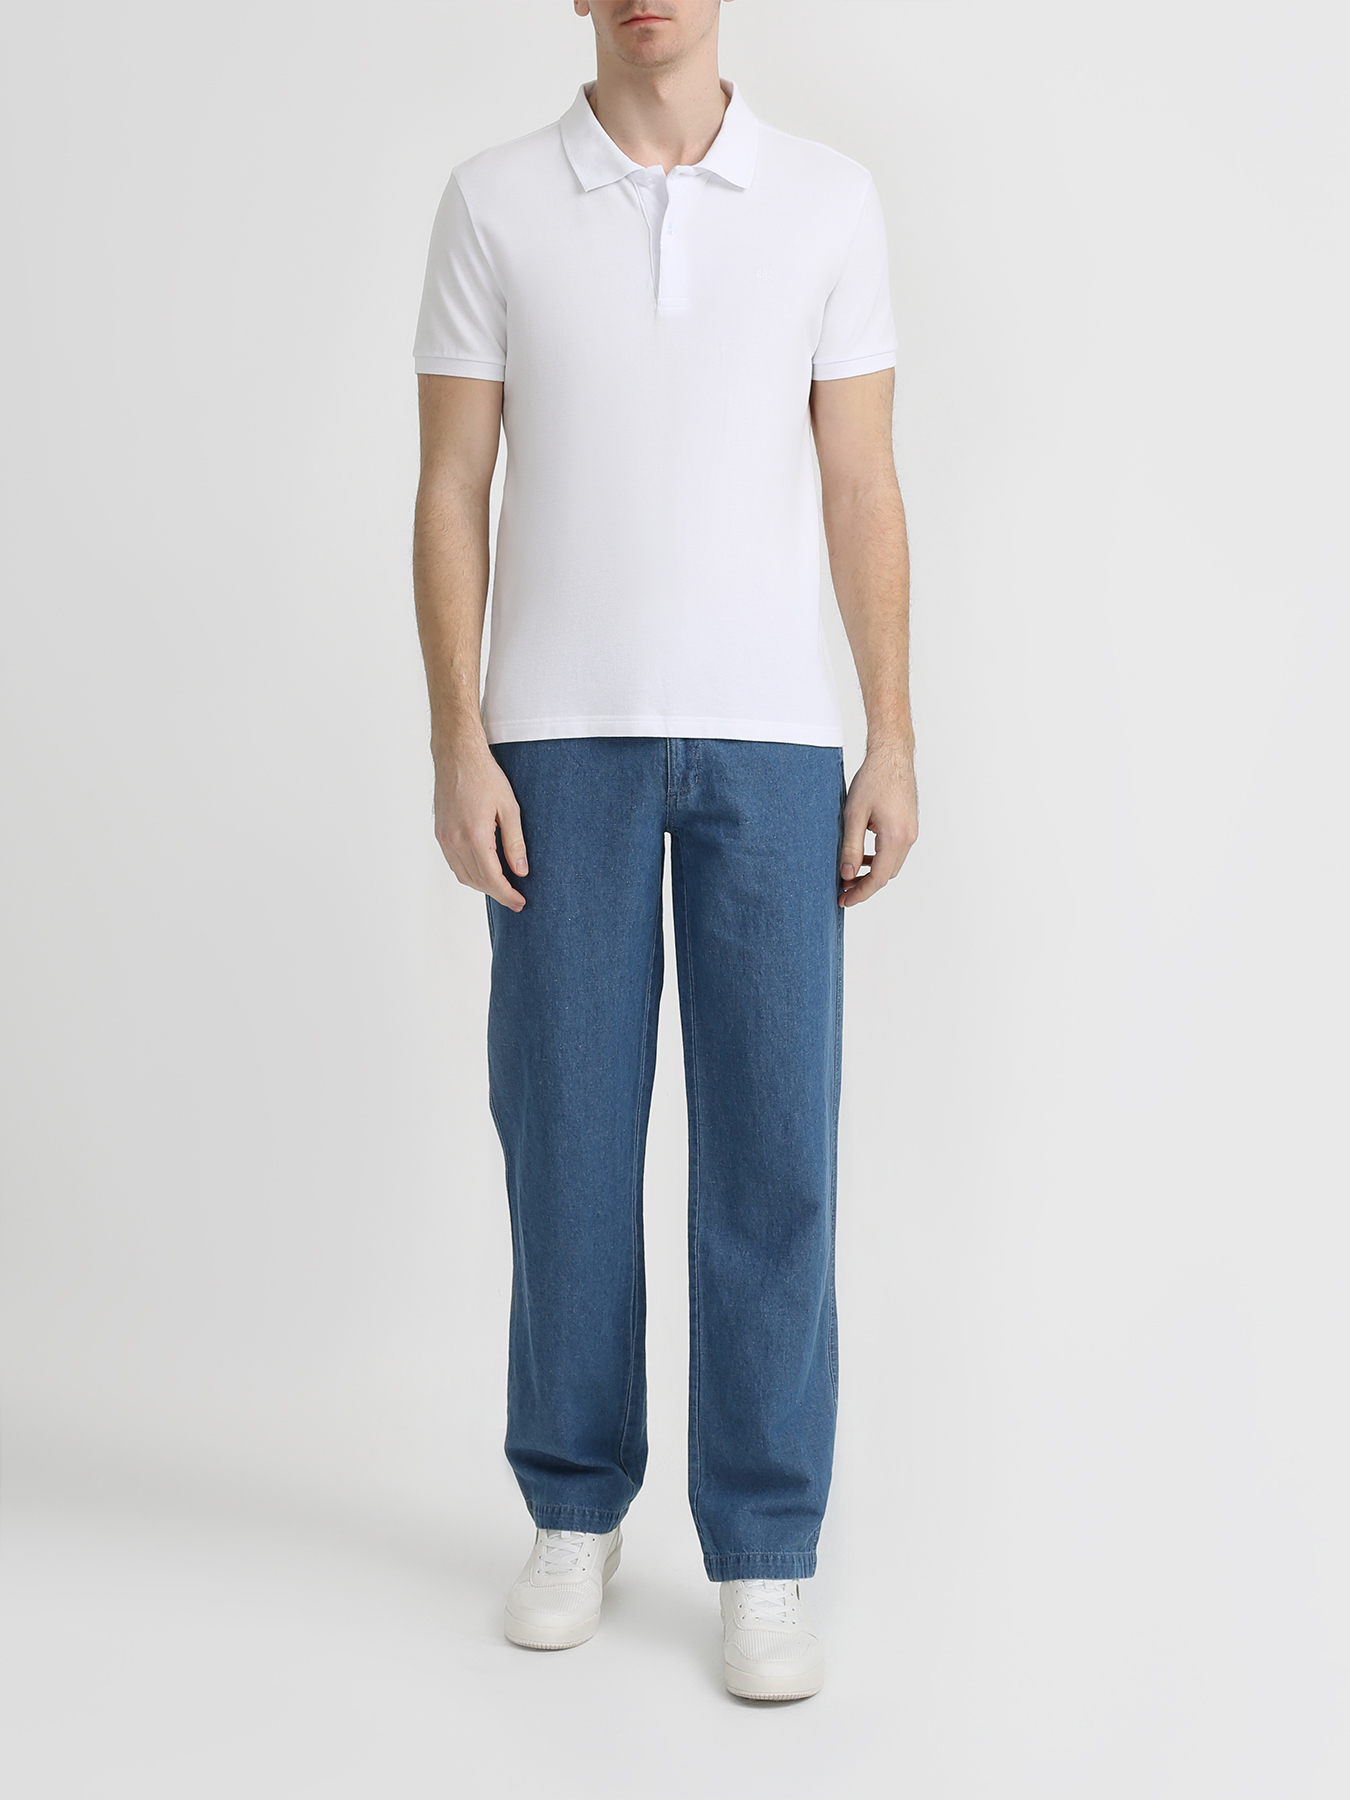 Alessandro Manzoni Jeans Прямые джинсы 330858-025